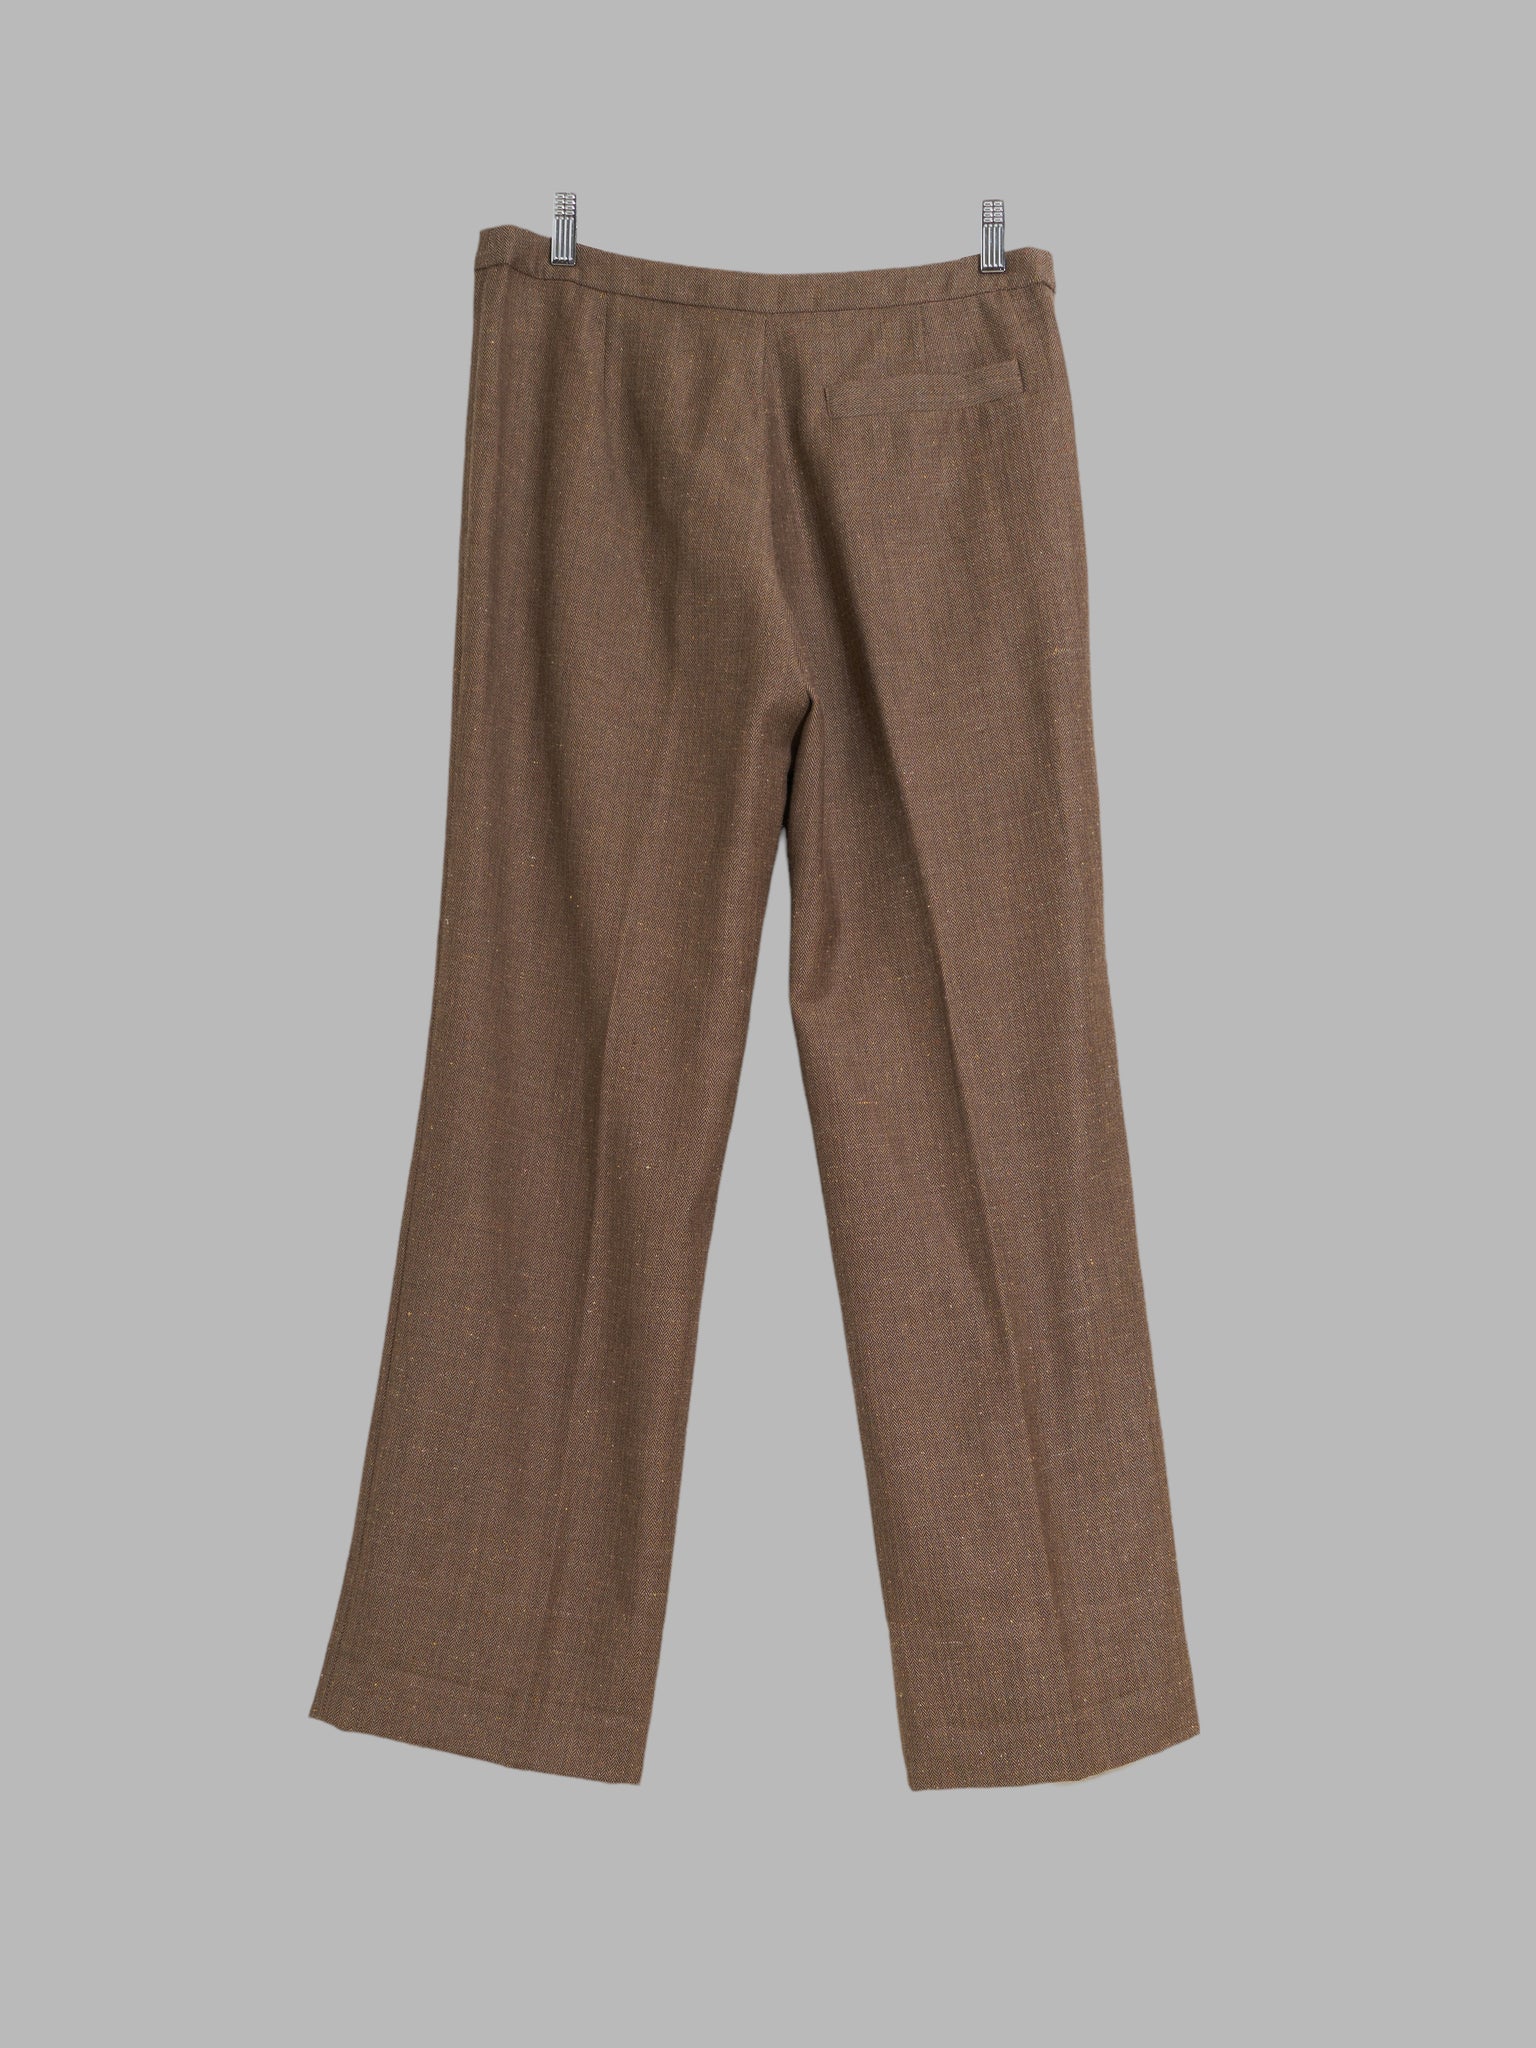 Kenzo brown wool cotton silk blend herringbone trousers - size 40